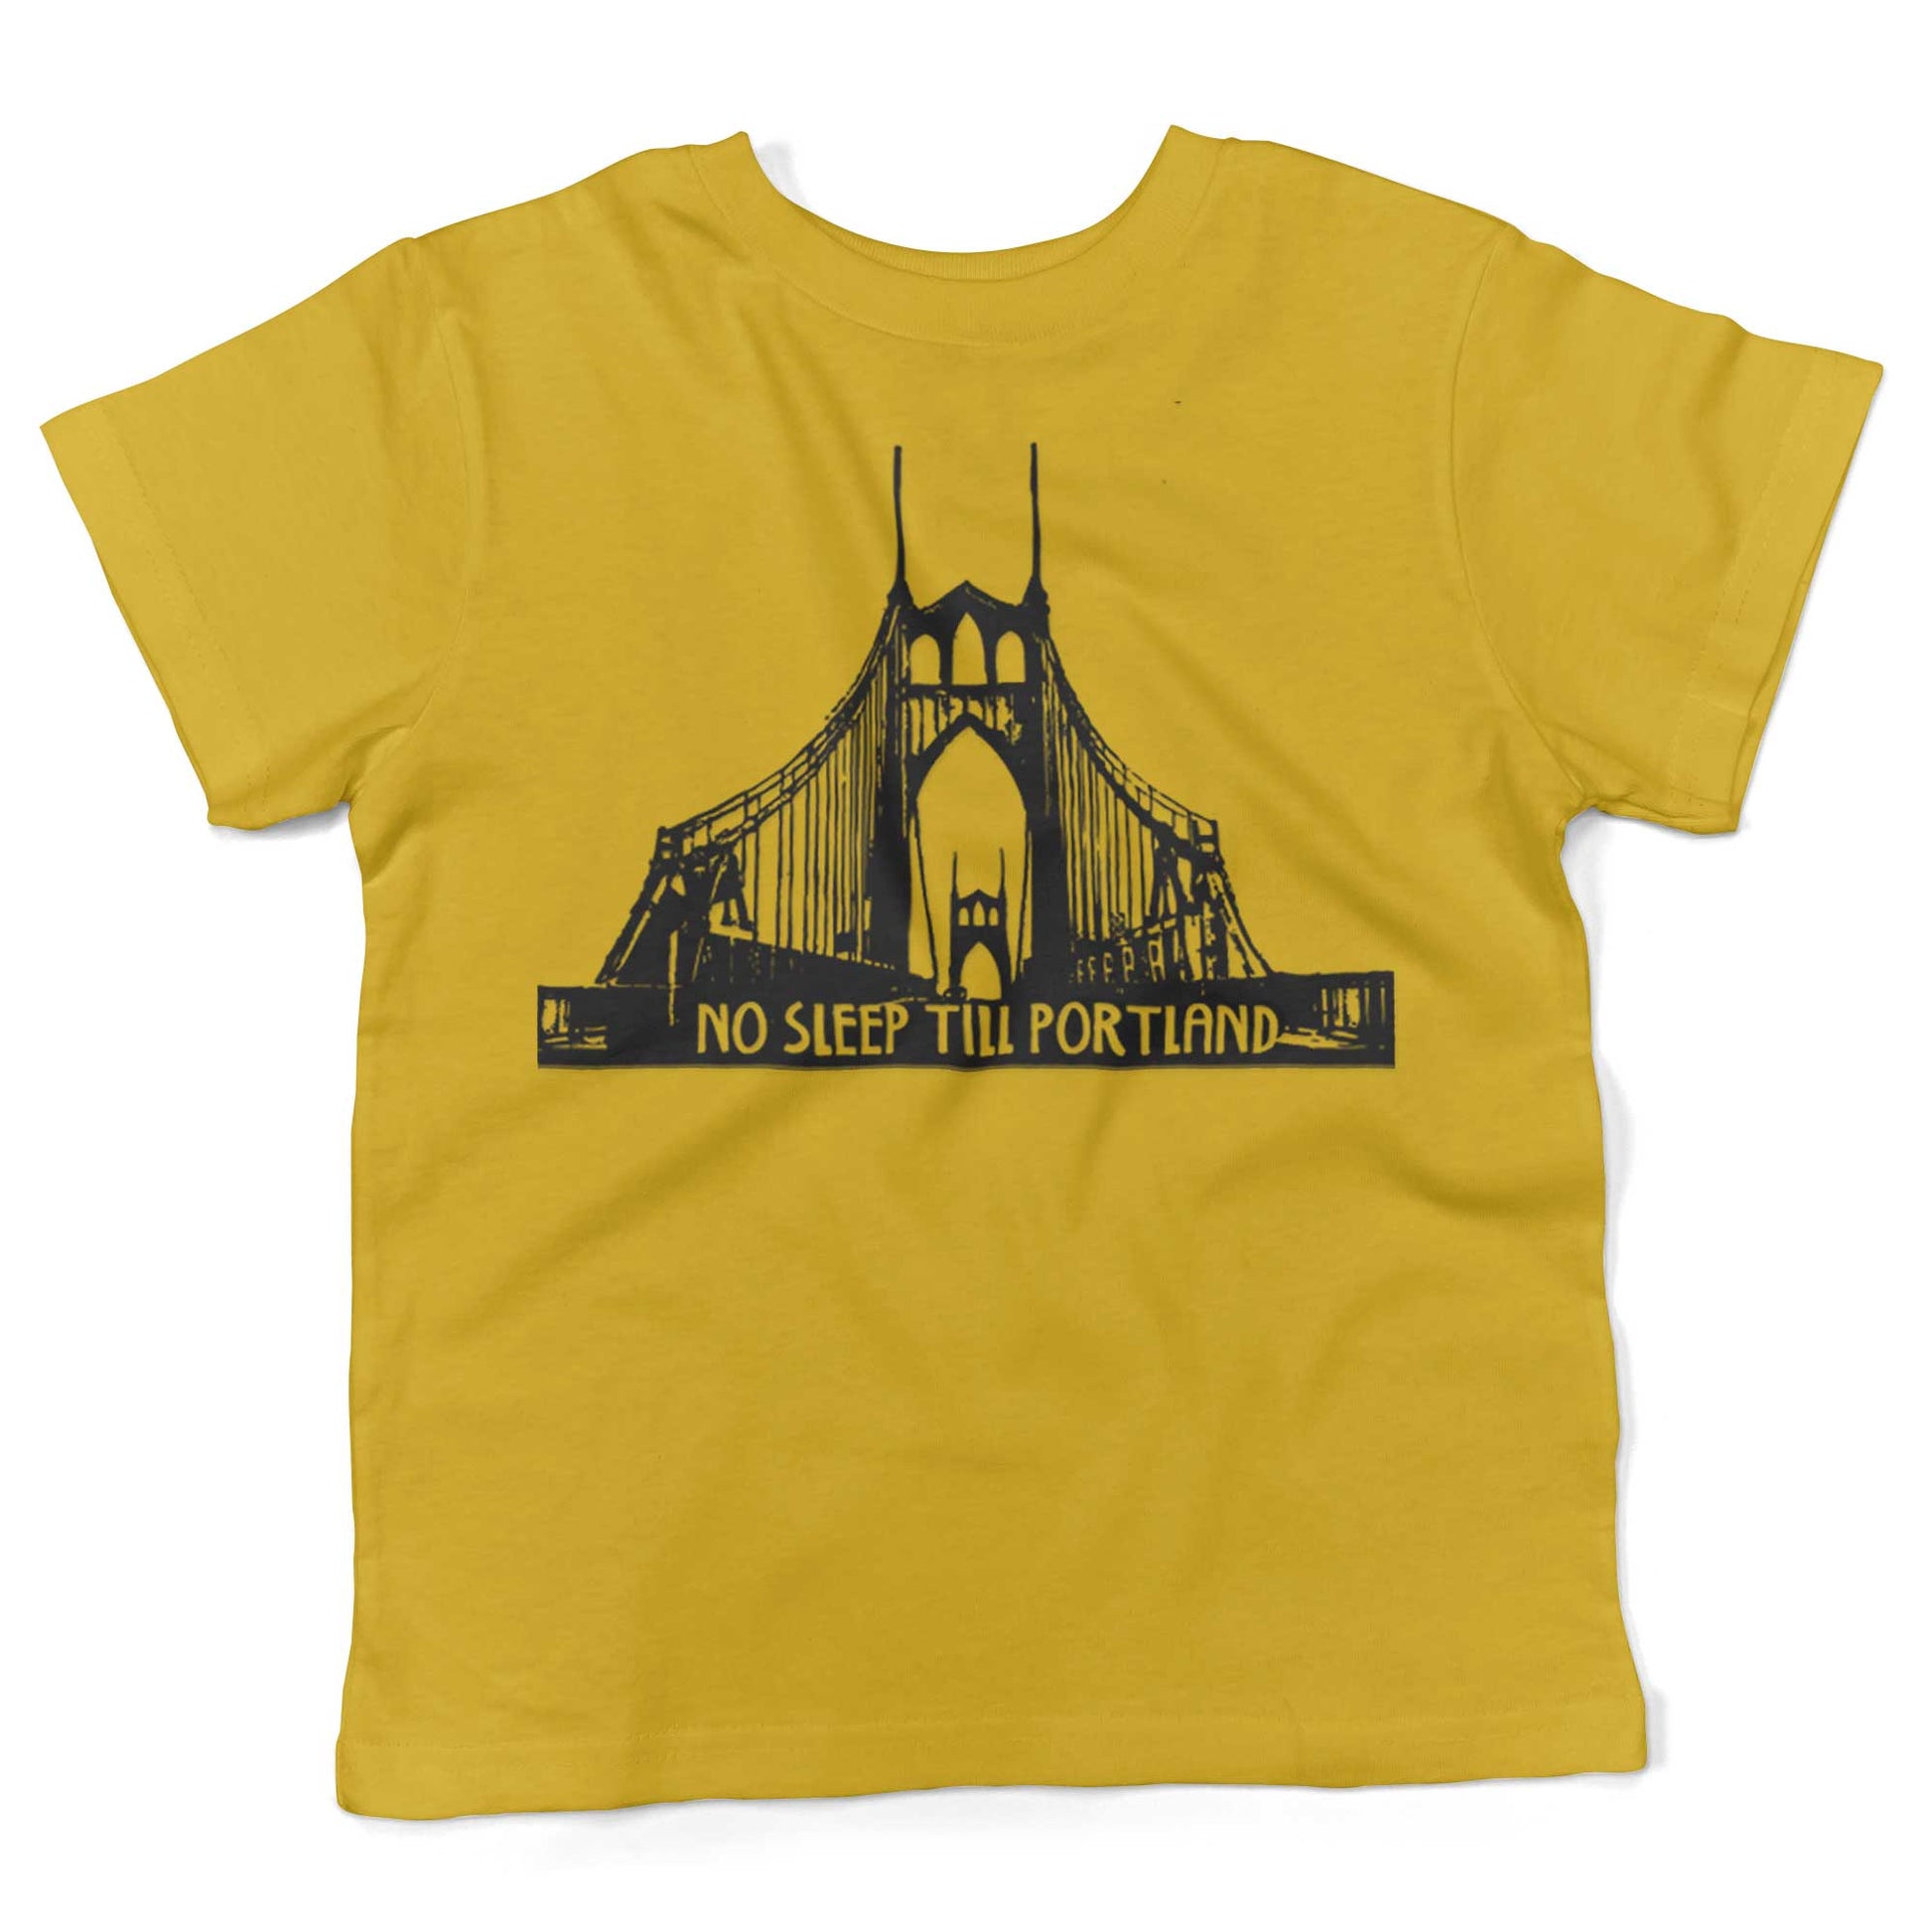 No Sleep Till Portland Toddler Shirt-Sunshine Yellow-2T